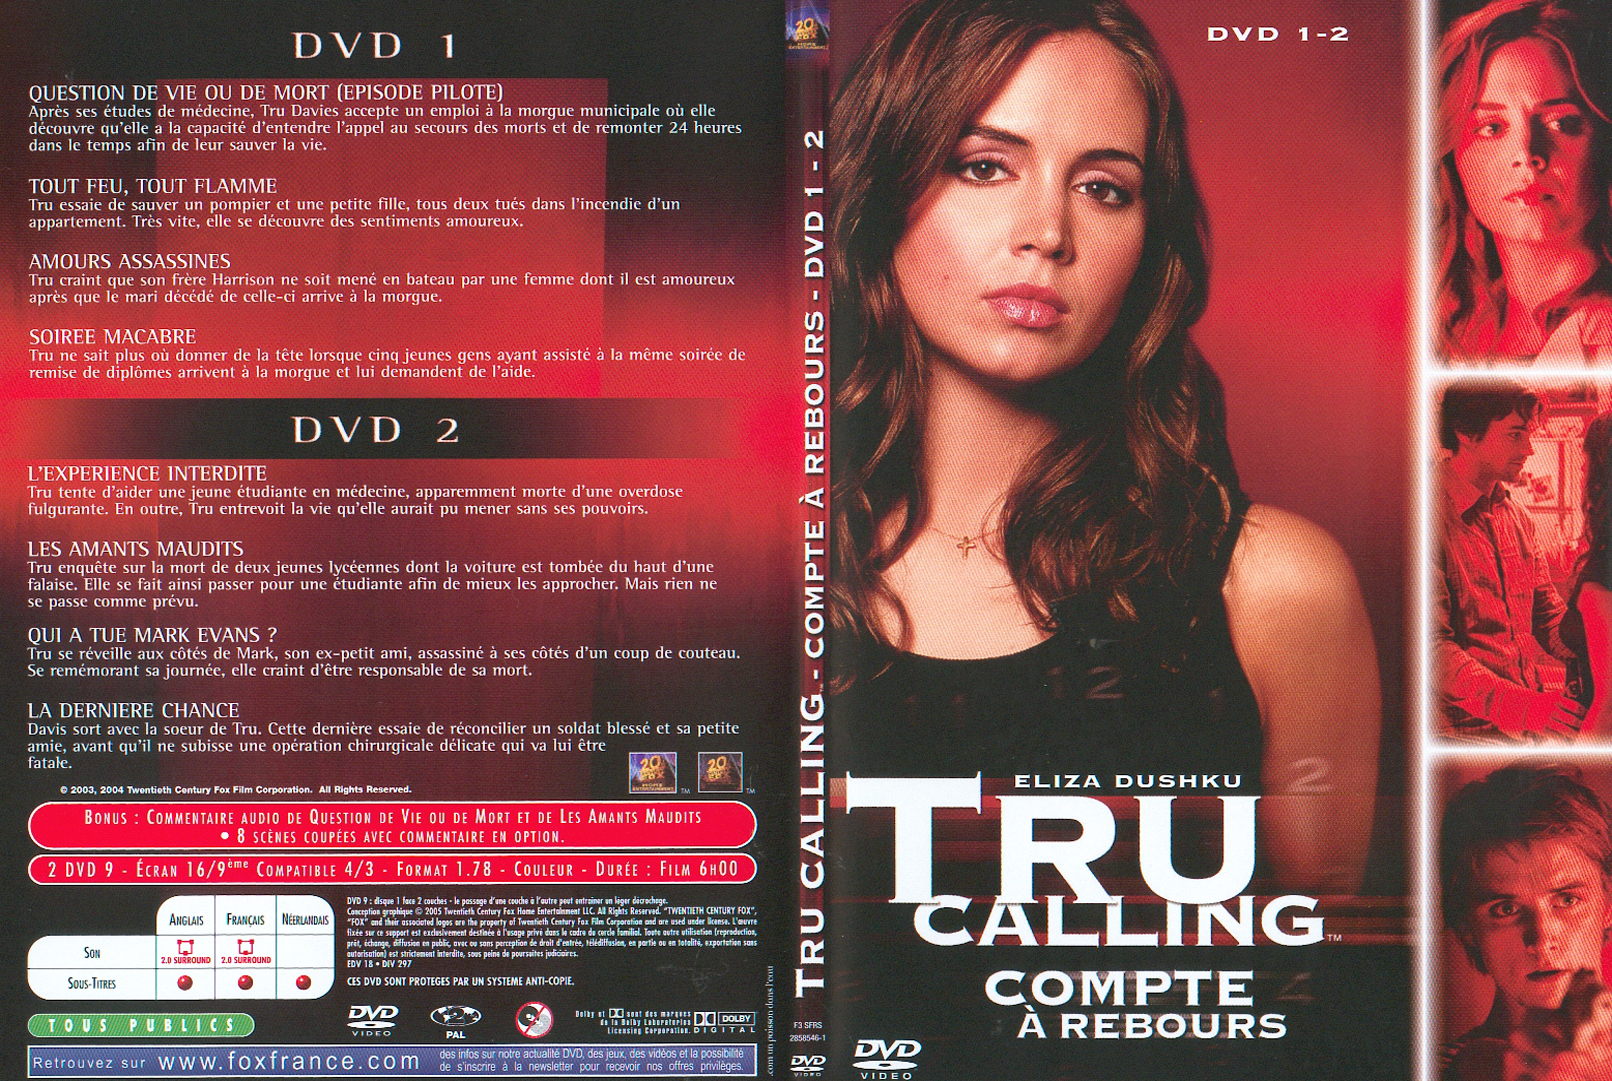 Jaquette DVD True calling saison 1 dvd 1